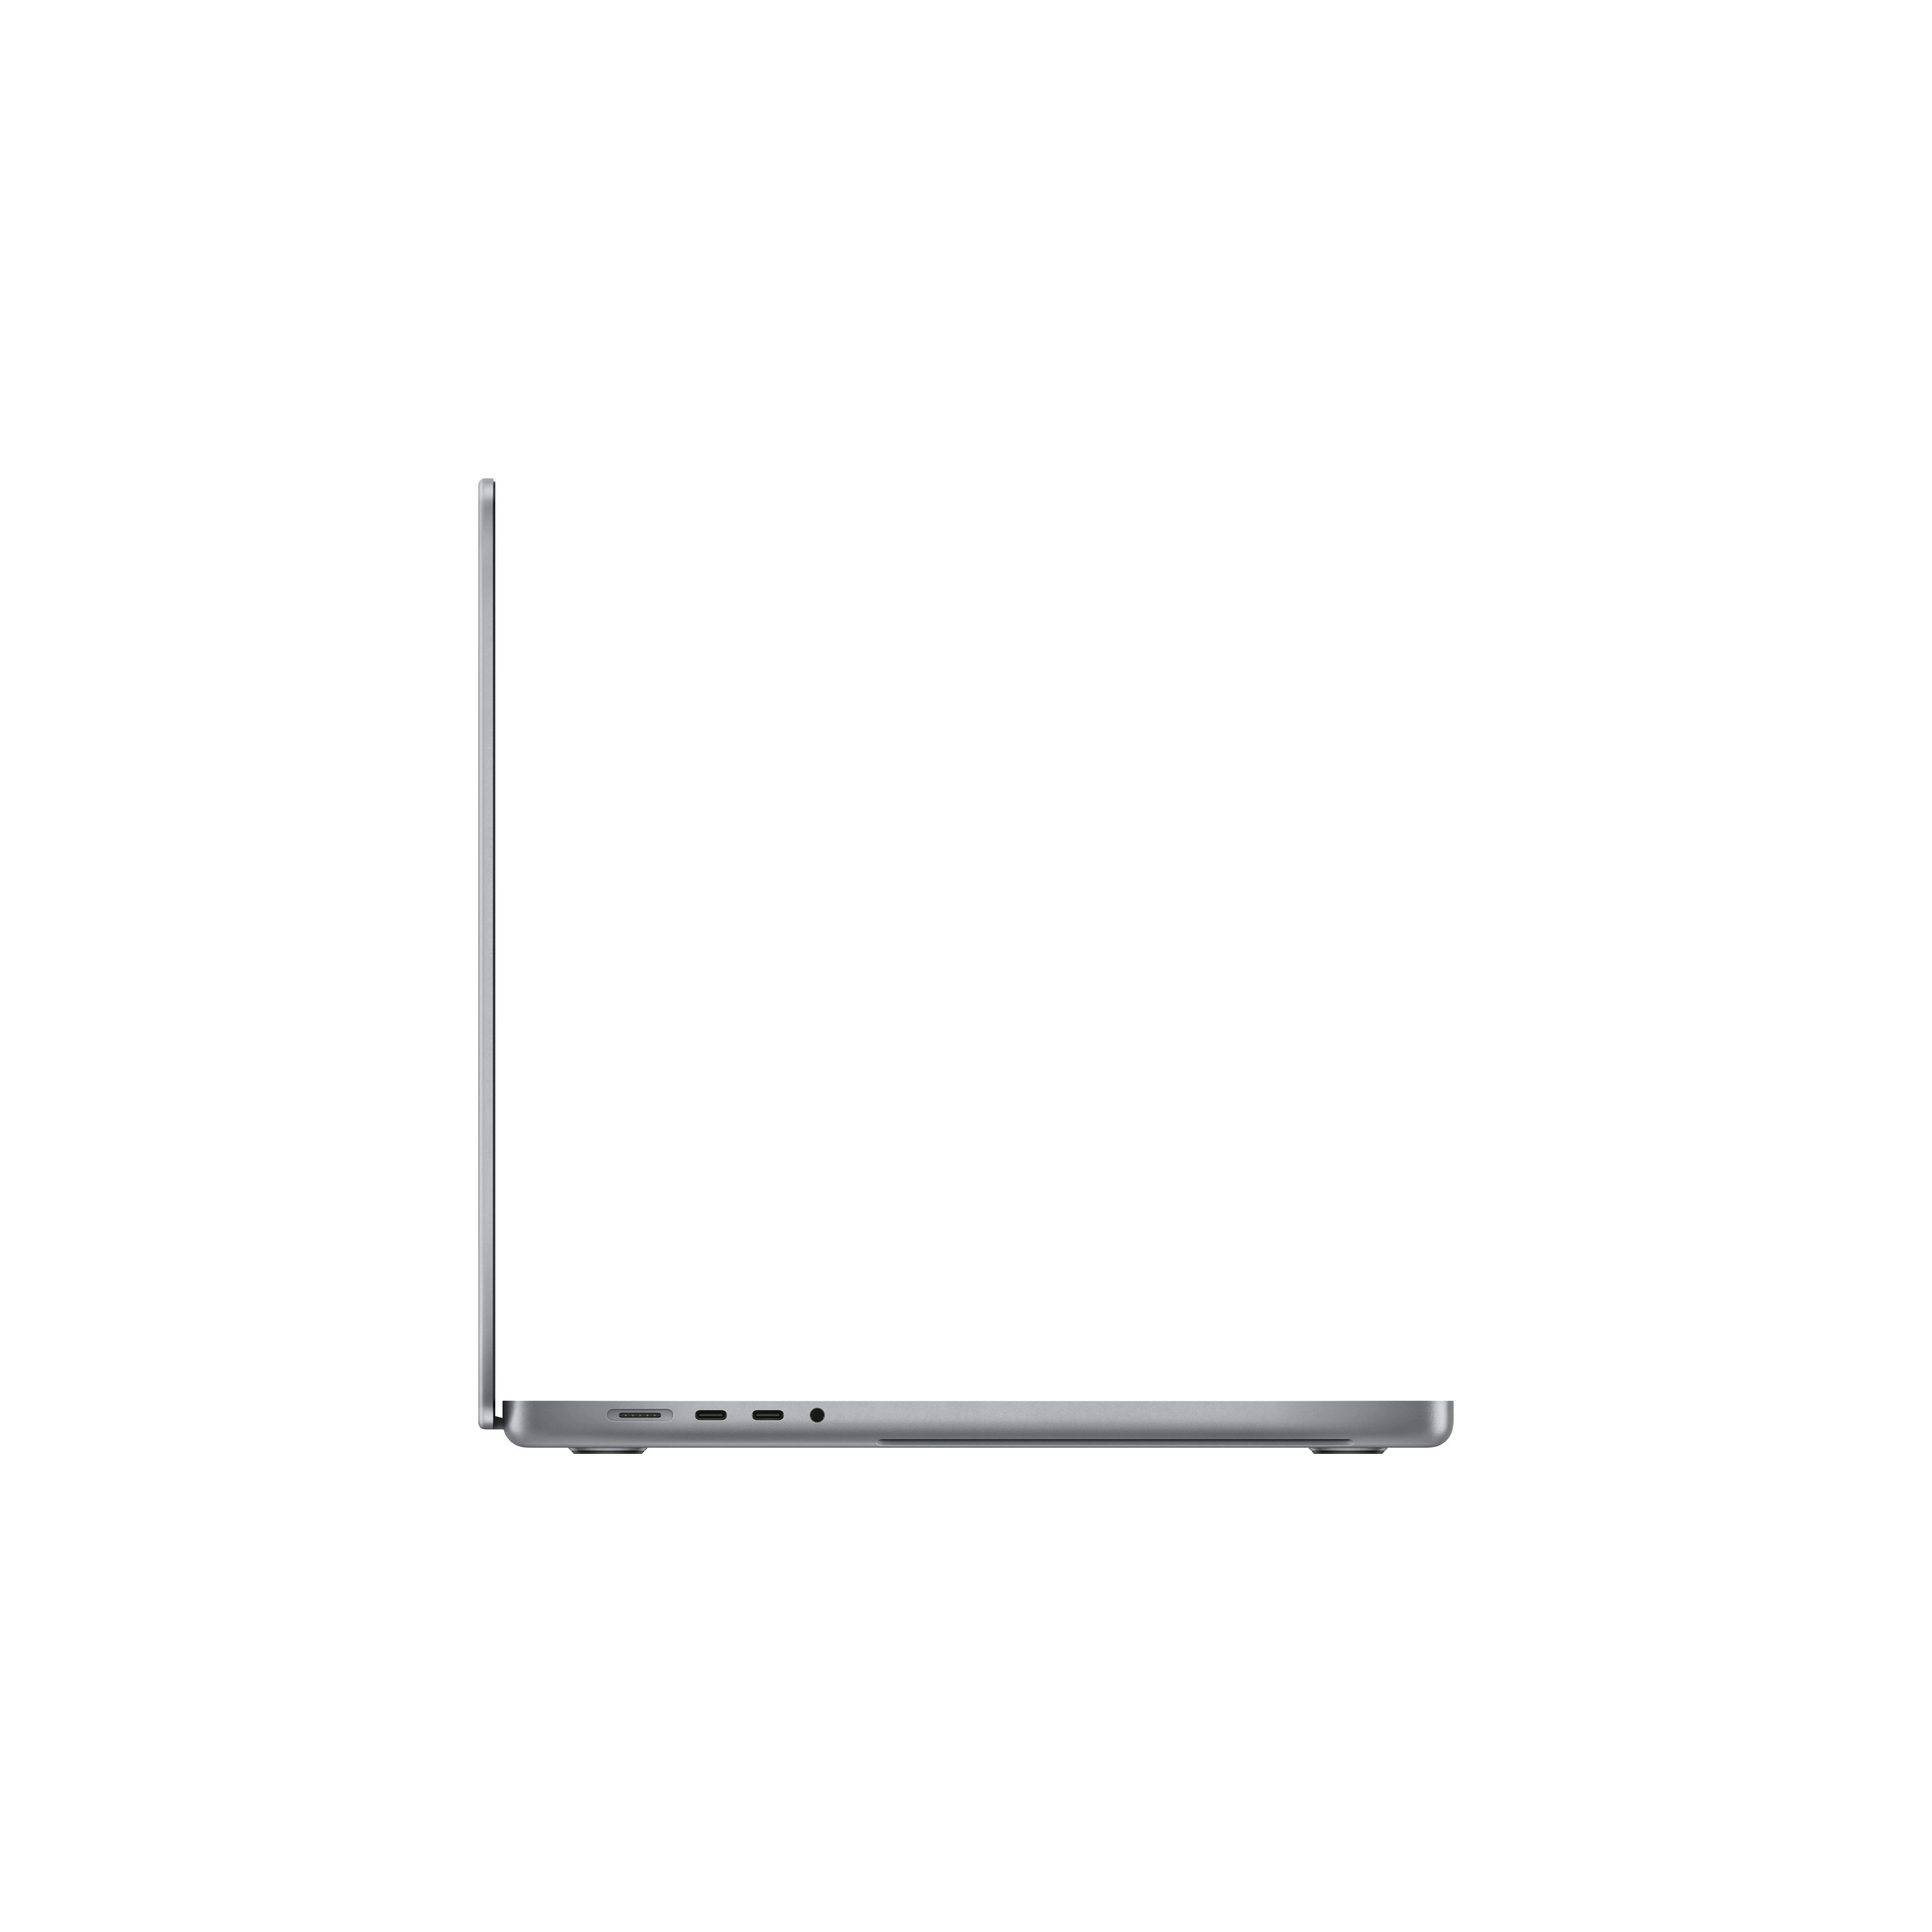 Apple MacBook Pro - M1 Pro 16-core GPU - 16GB RAM - 512GB SSD